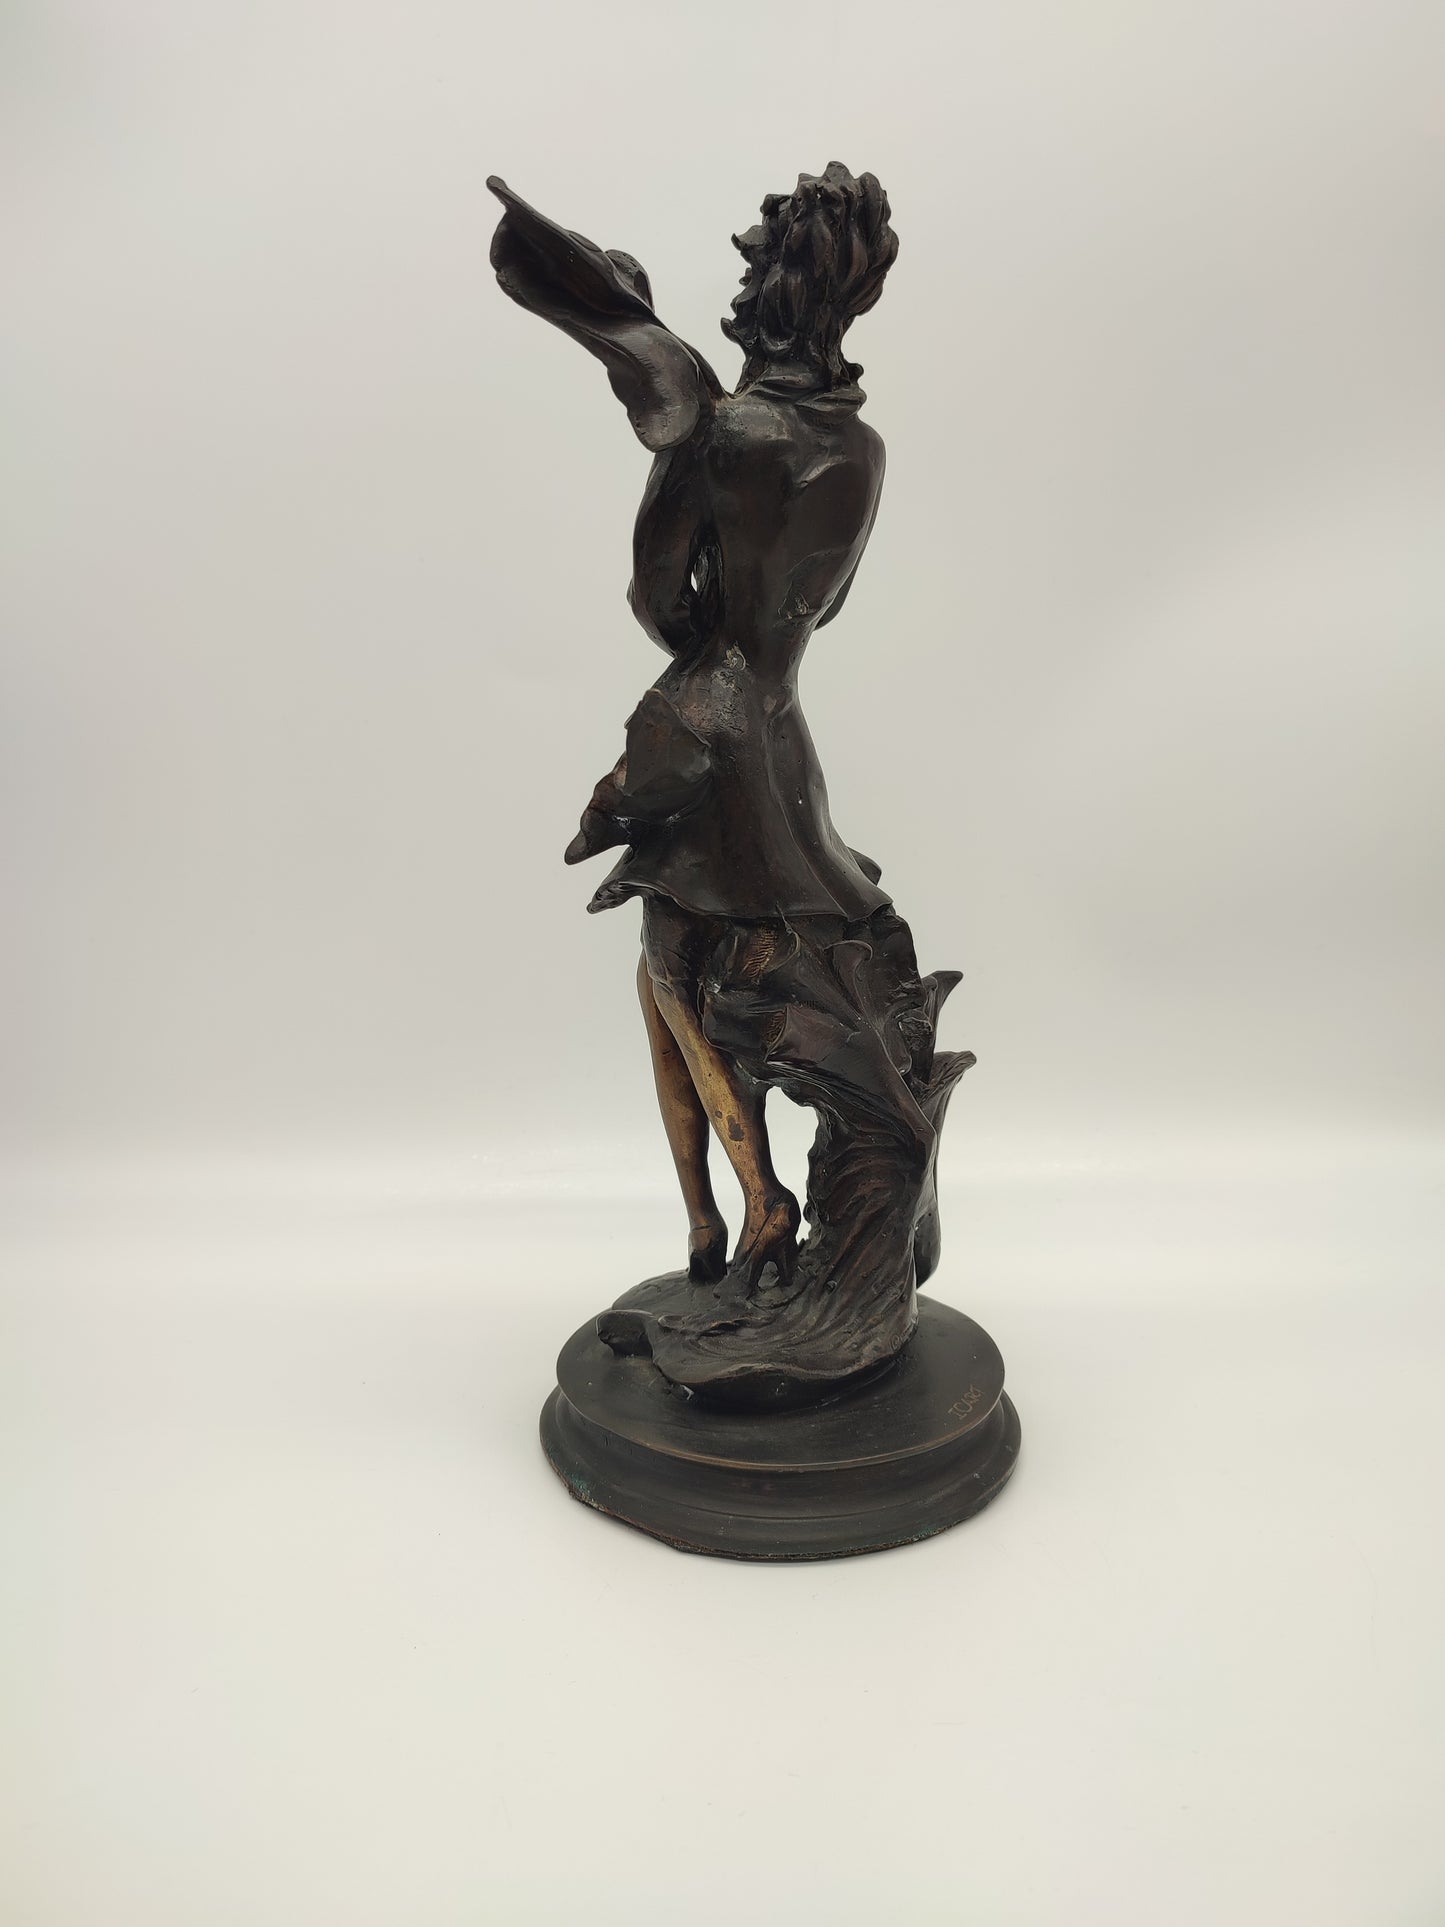 70915 Statua donna in bronzo Icart